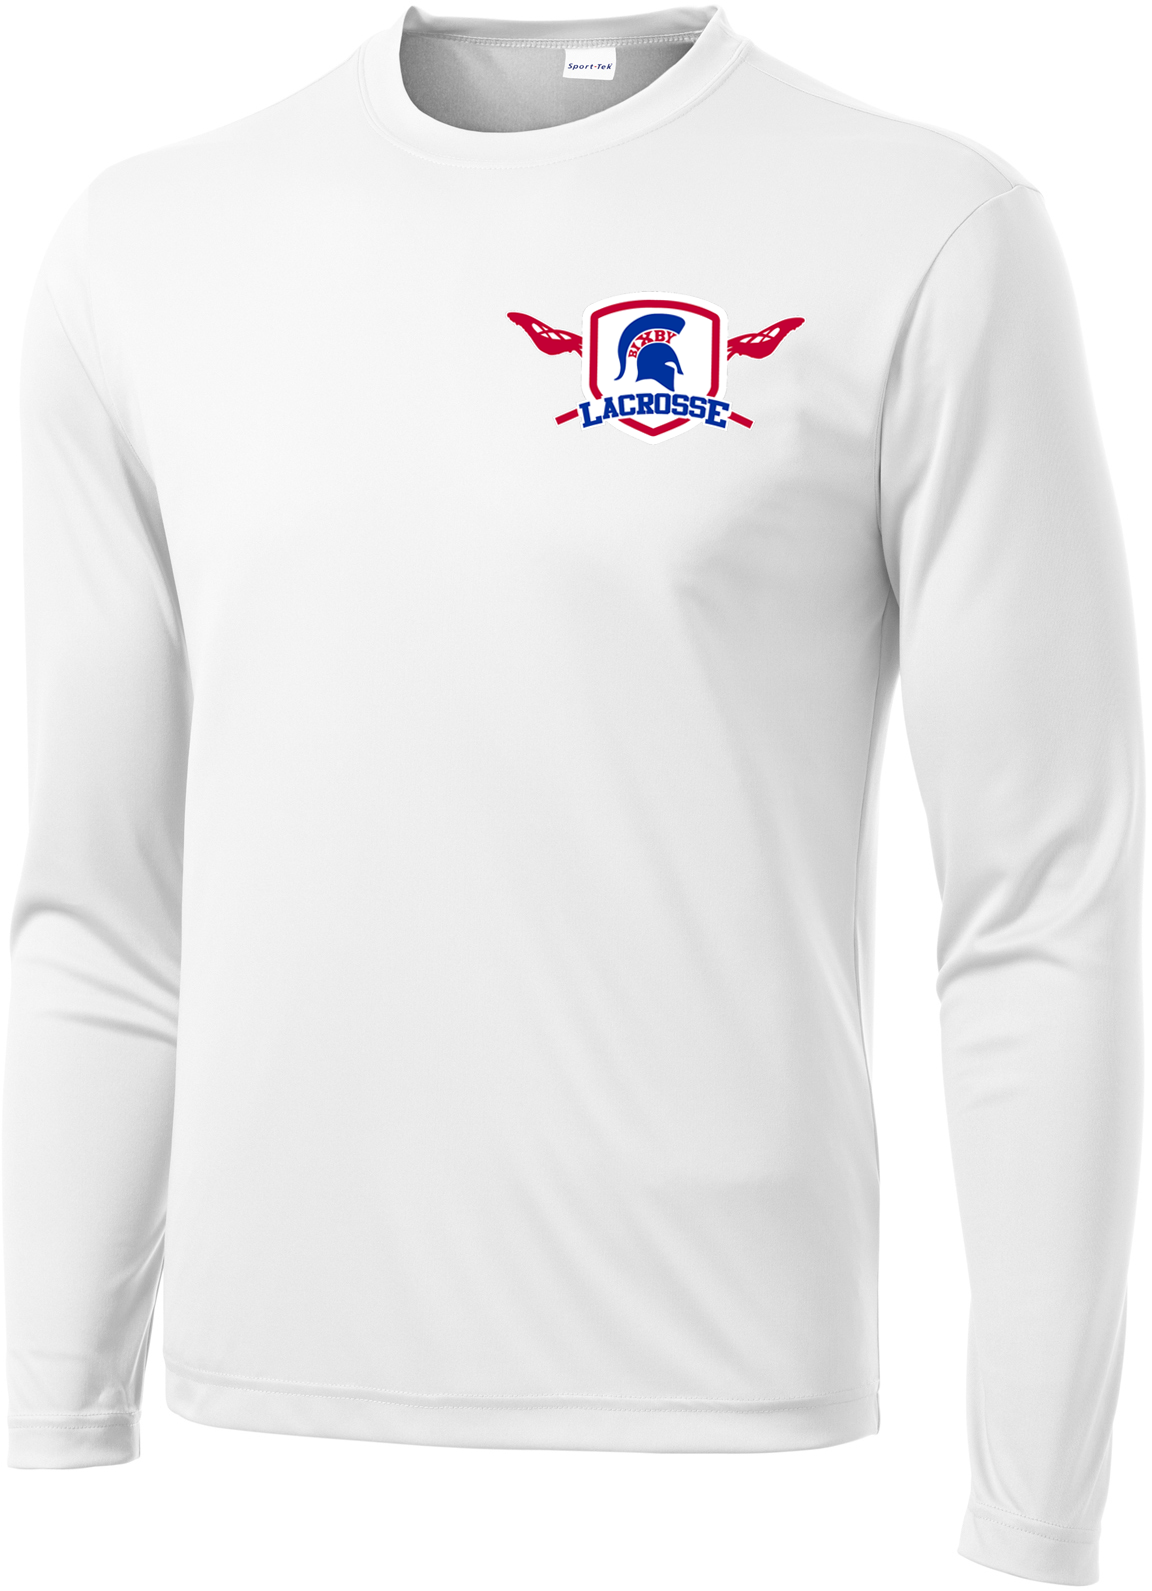 Bixby Lacrosse White Long Sleeve Performance Shirt